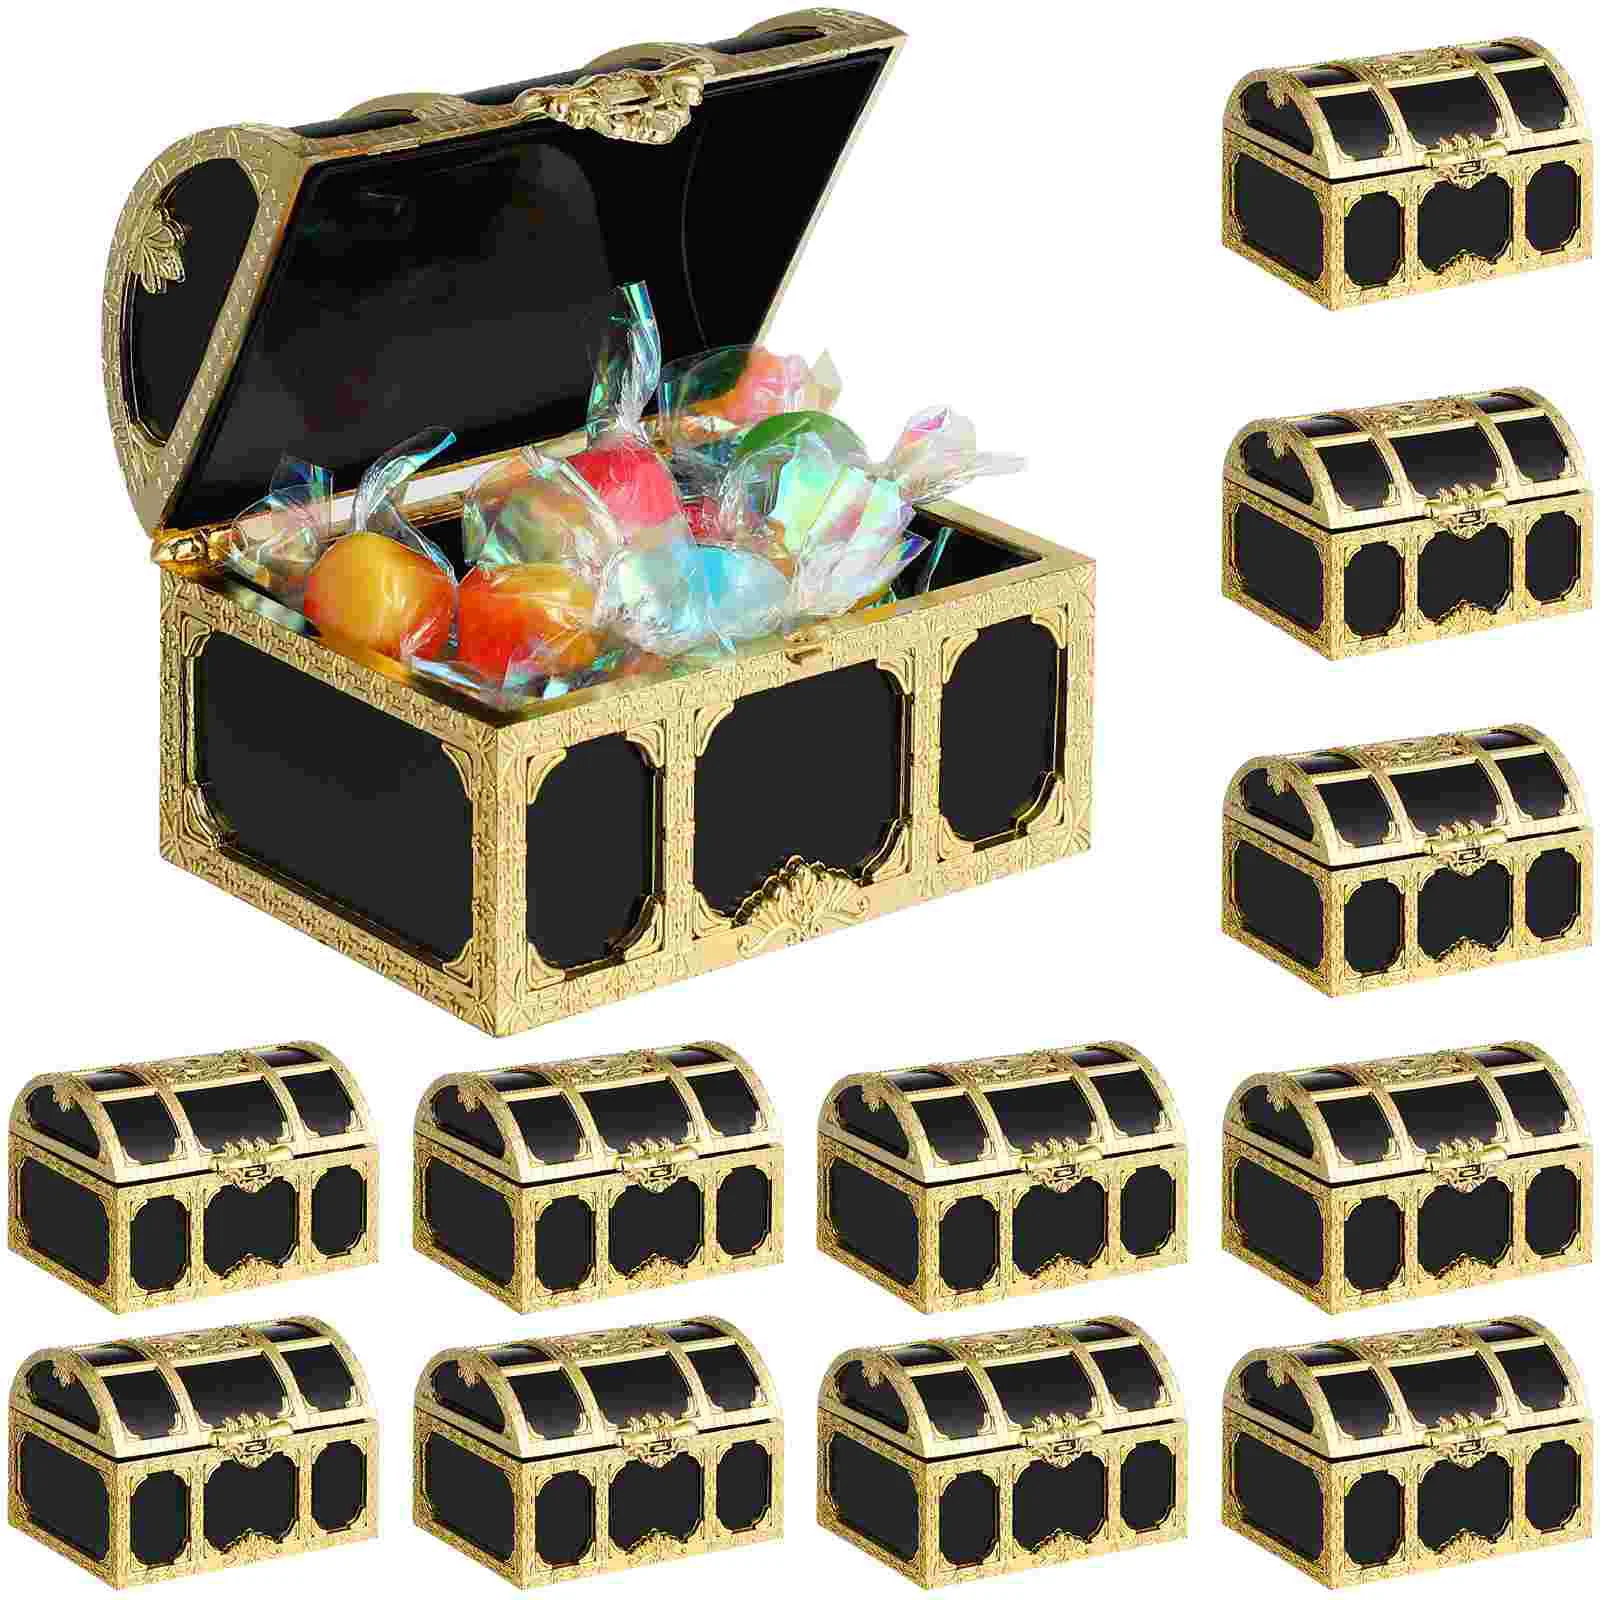 

12 Pcs Pirate Treasure Chests Plastic Candy Storage Boxes Treasure Toys Vintage Props Decorations Party Favors Treat